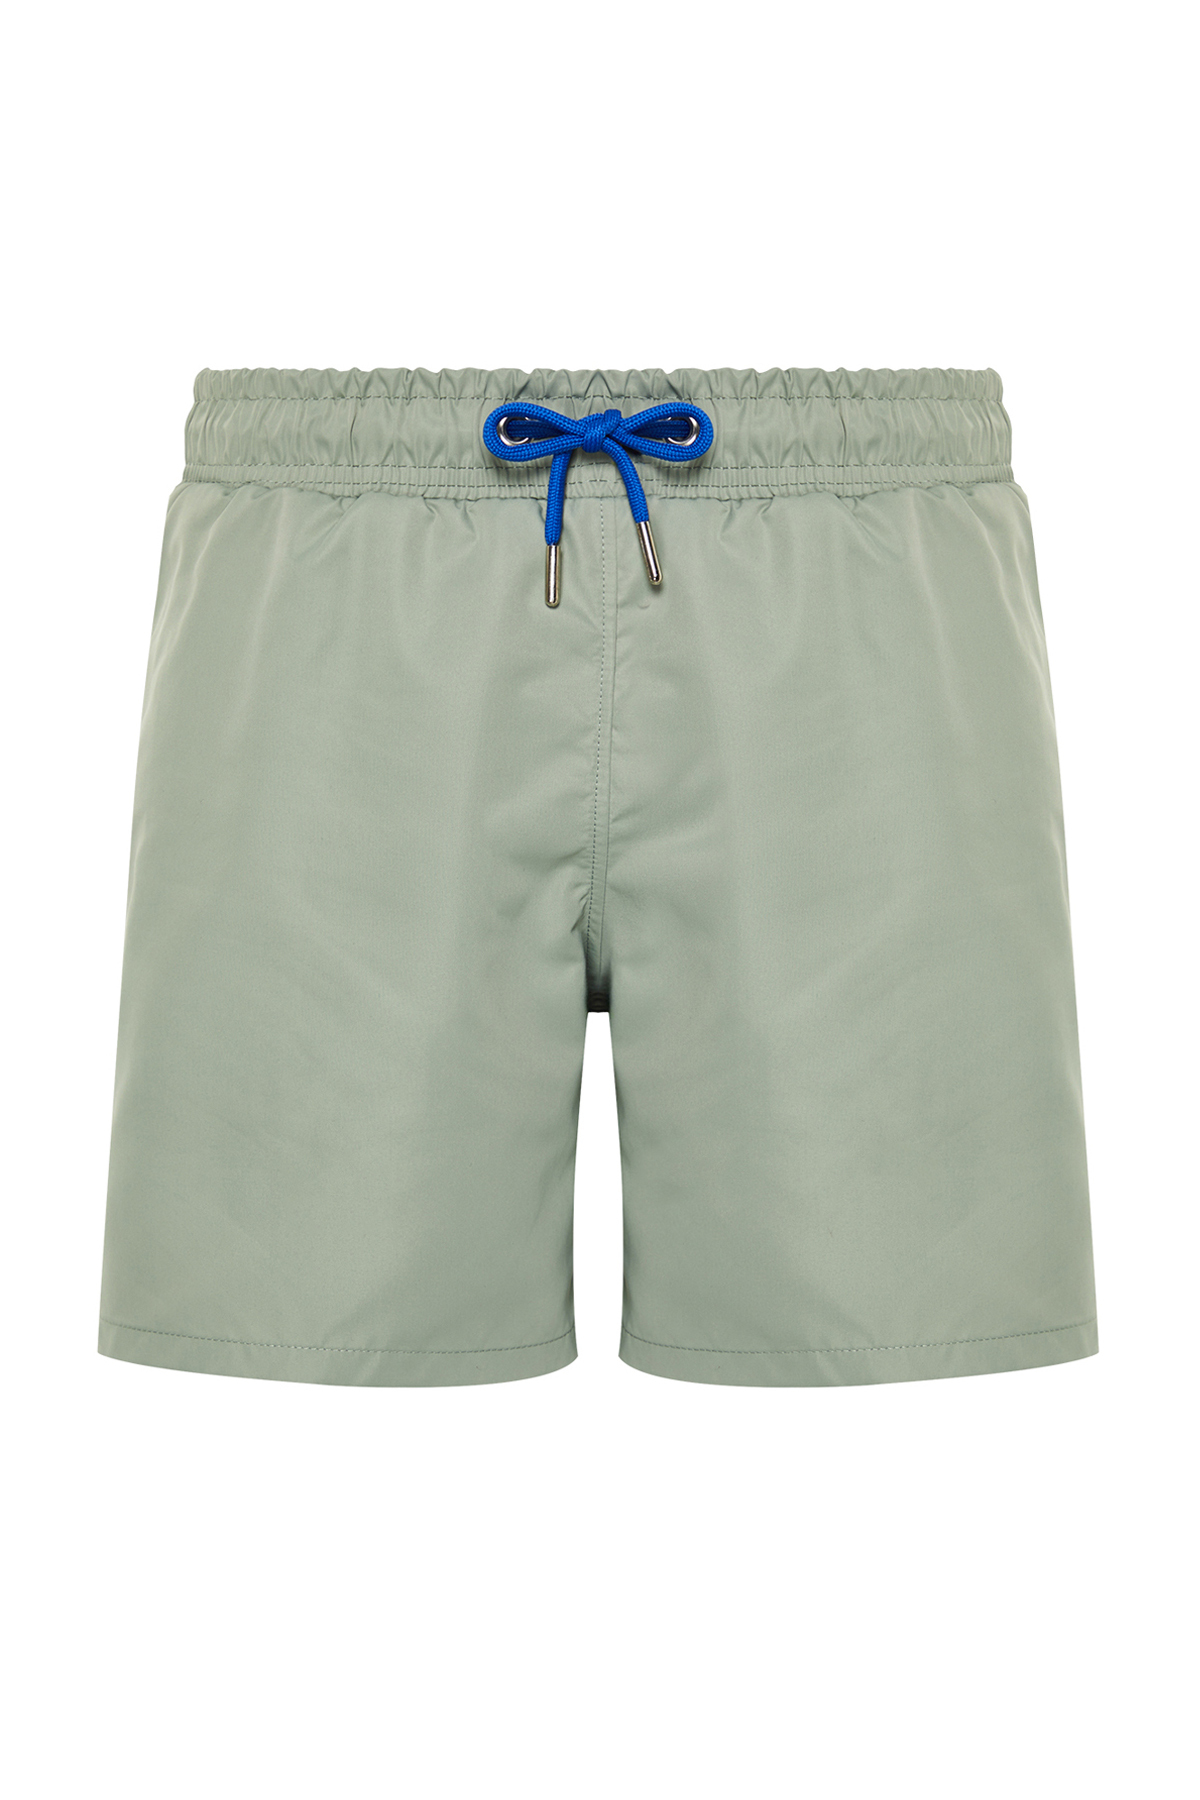 Trendyol Light Khaki Men's Basic Standard Size Sea Shorts